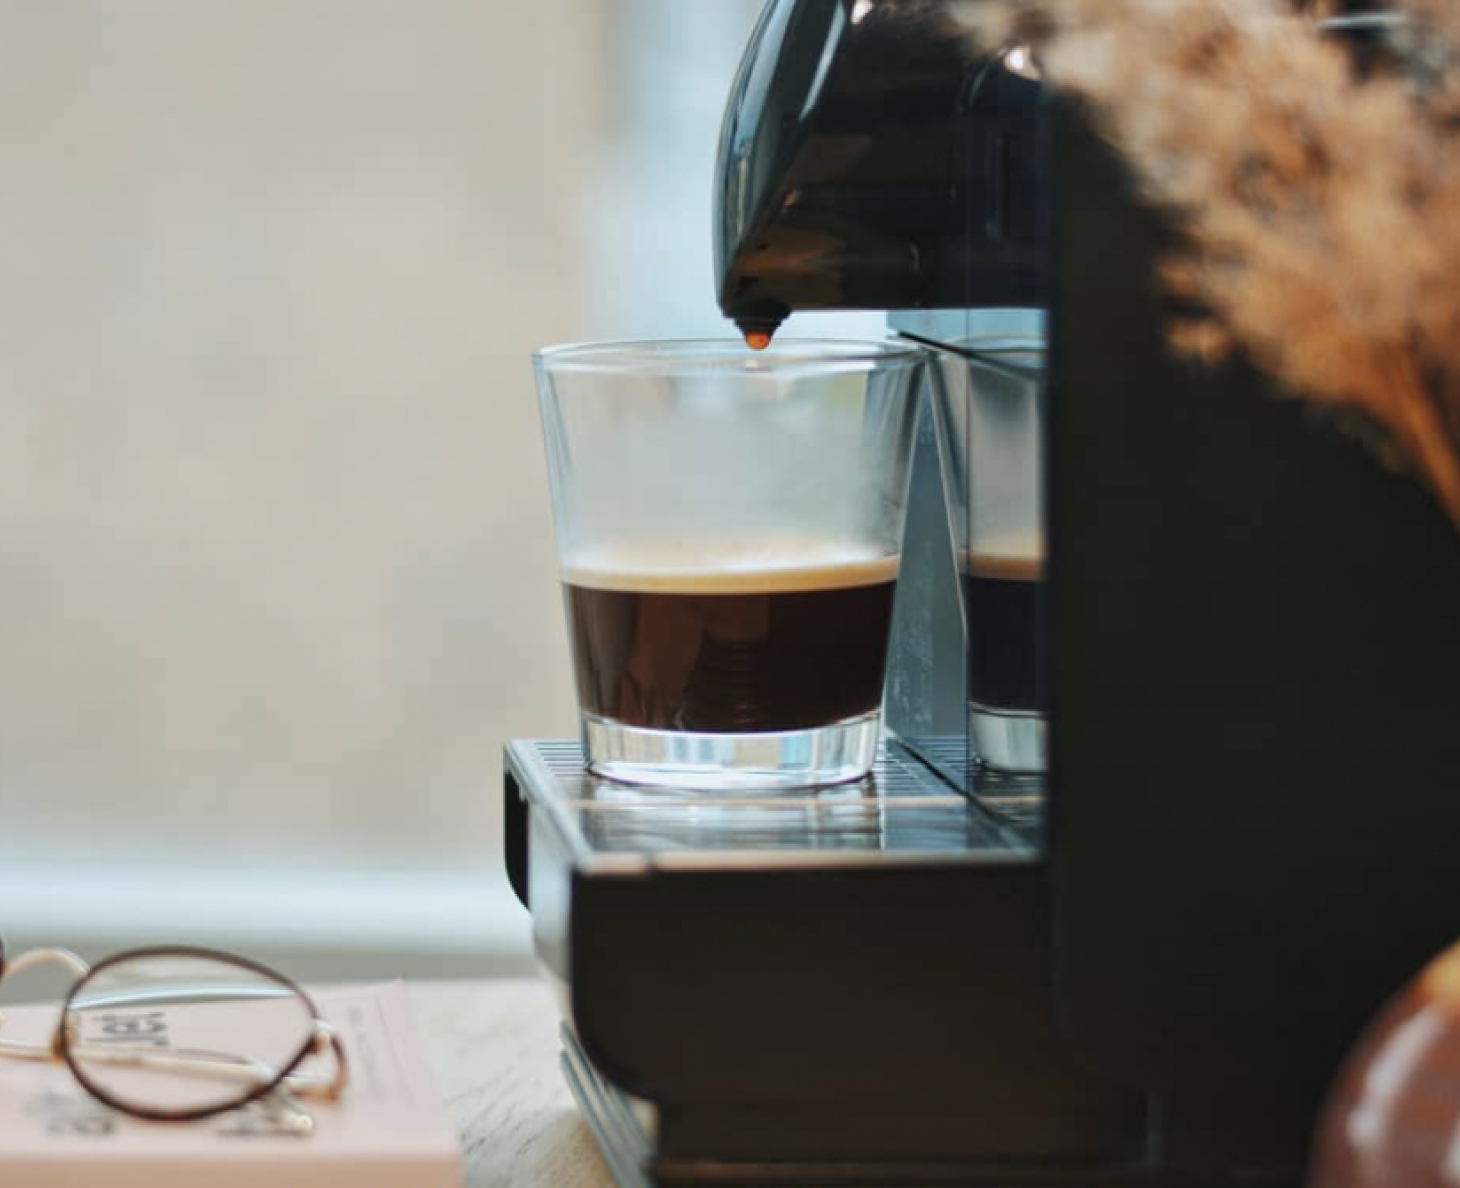 Coffee machine for nespresso pods